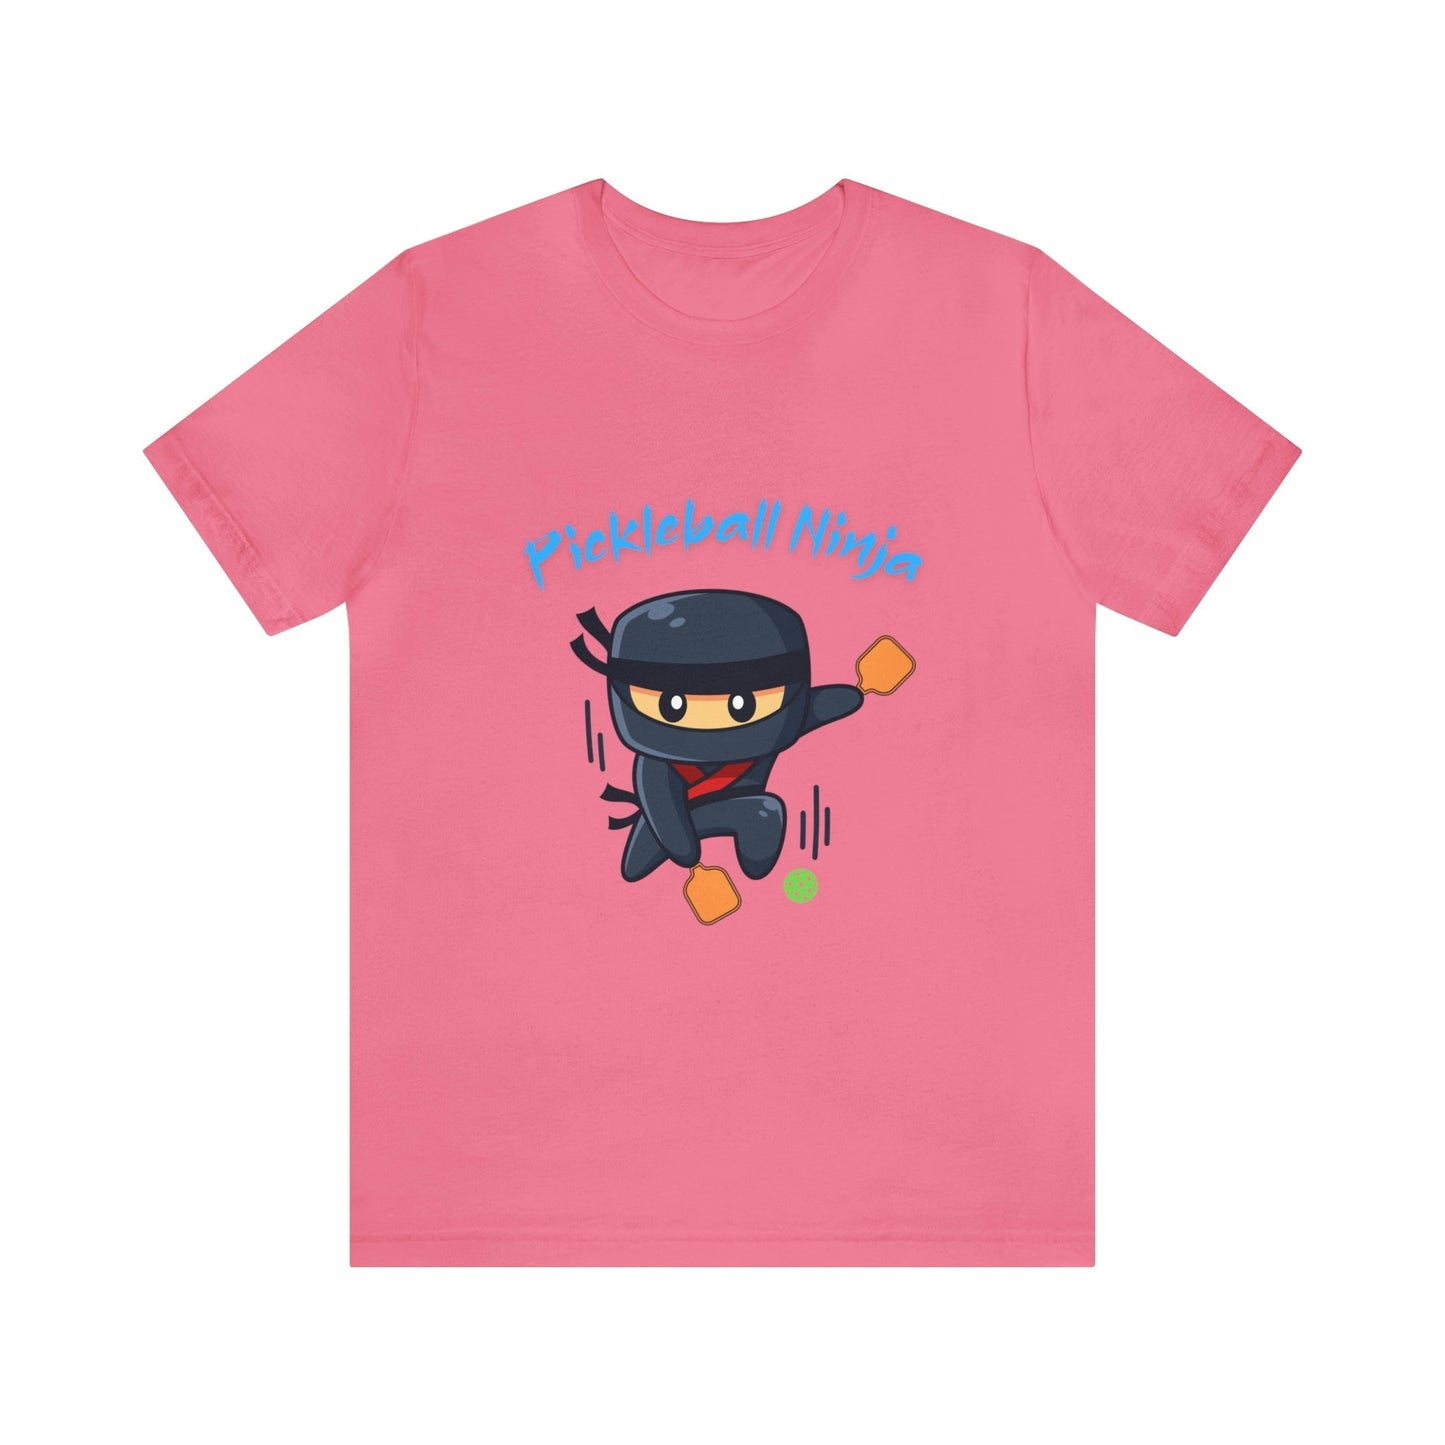 'Pickleball Ninja' T-Shirt